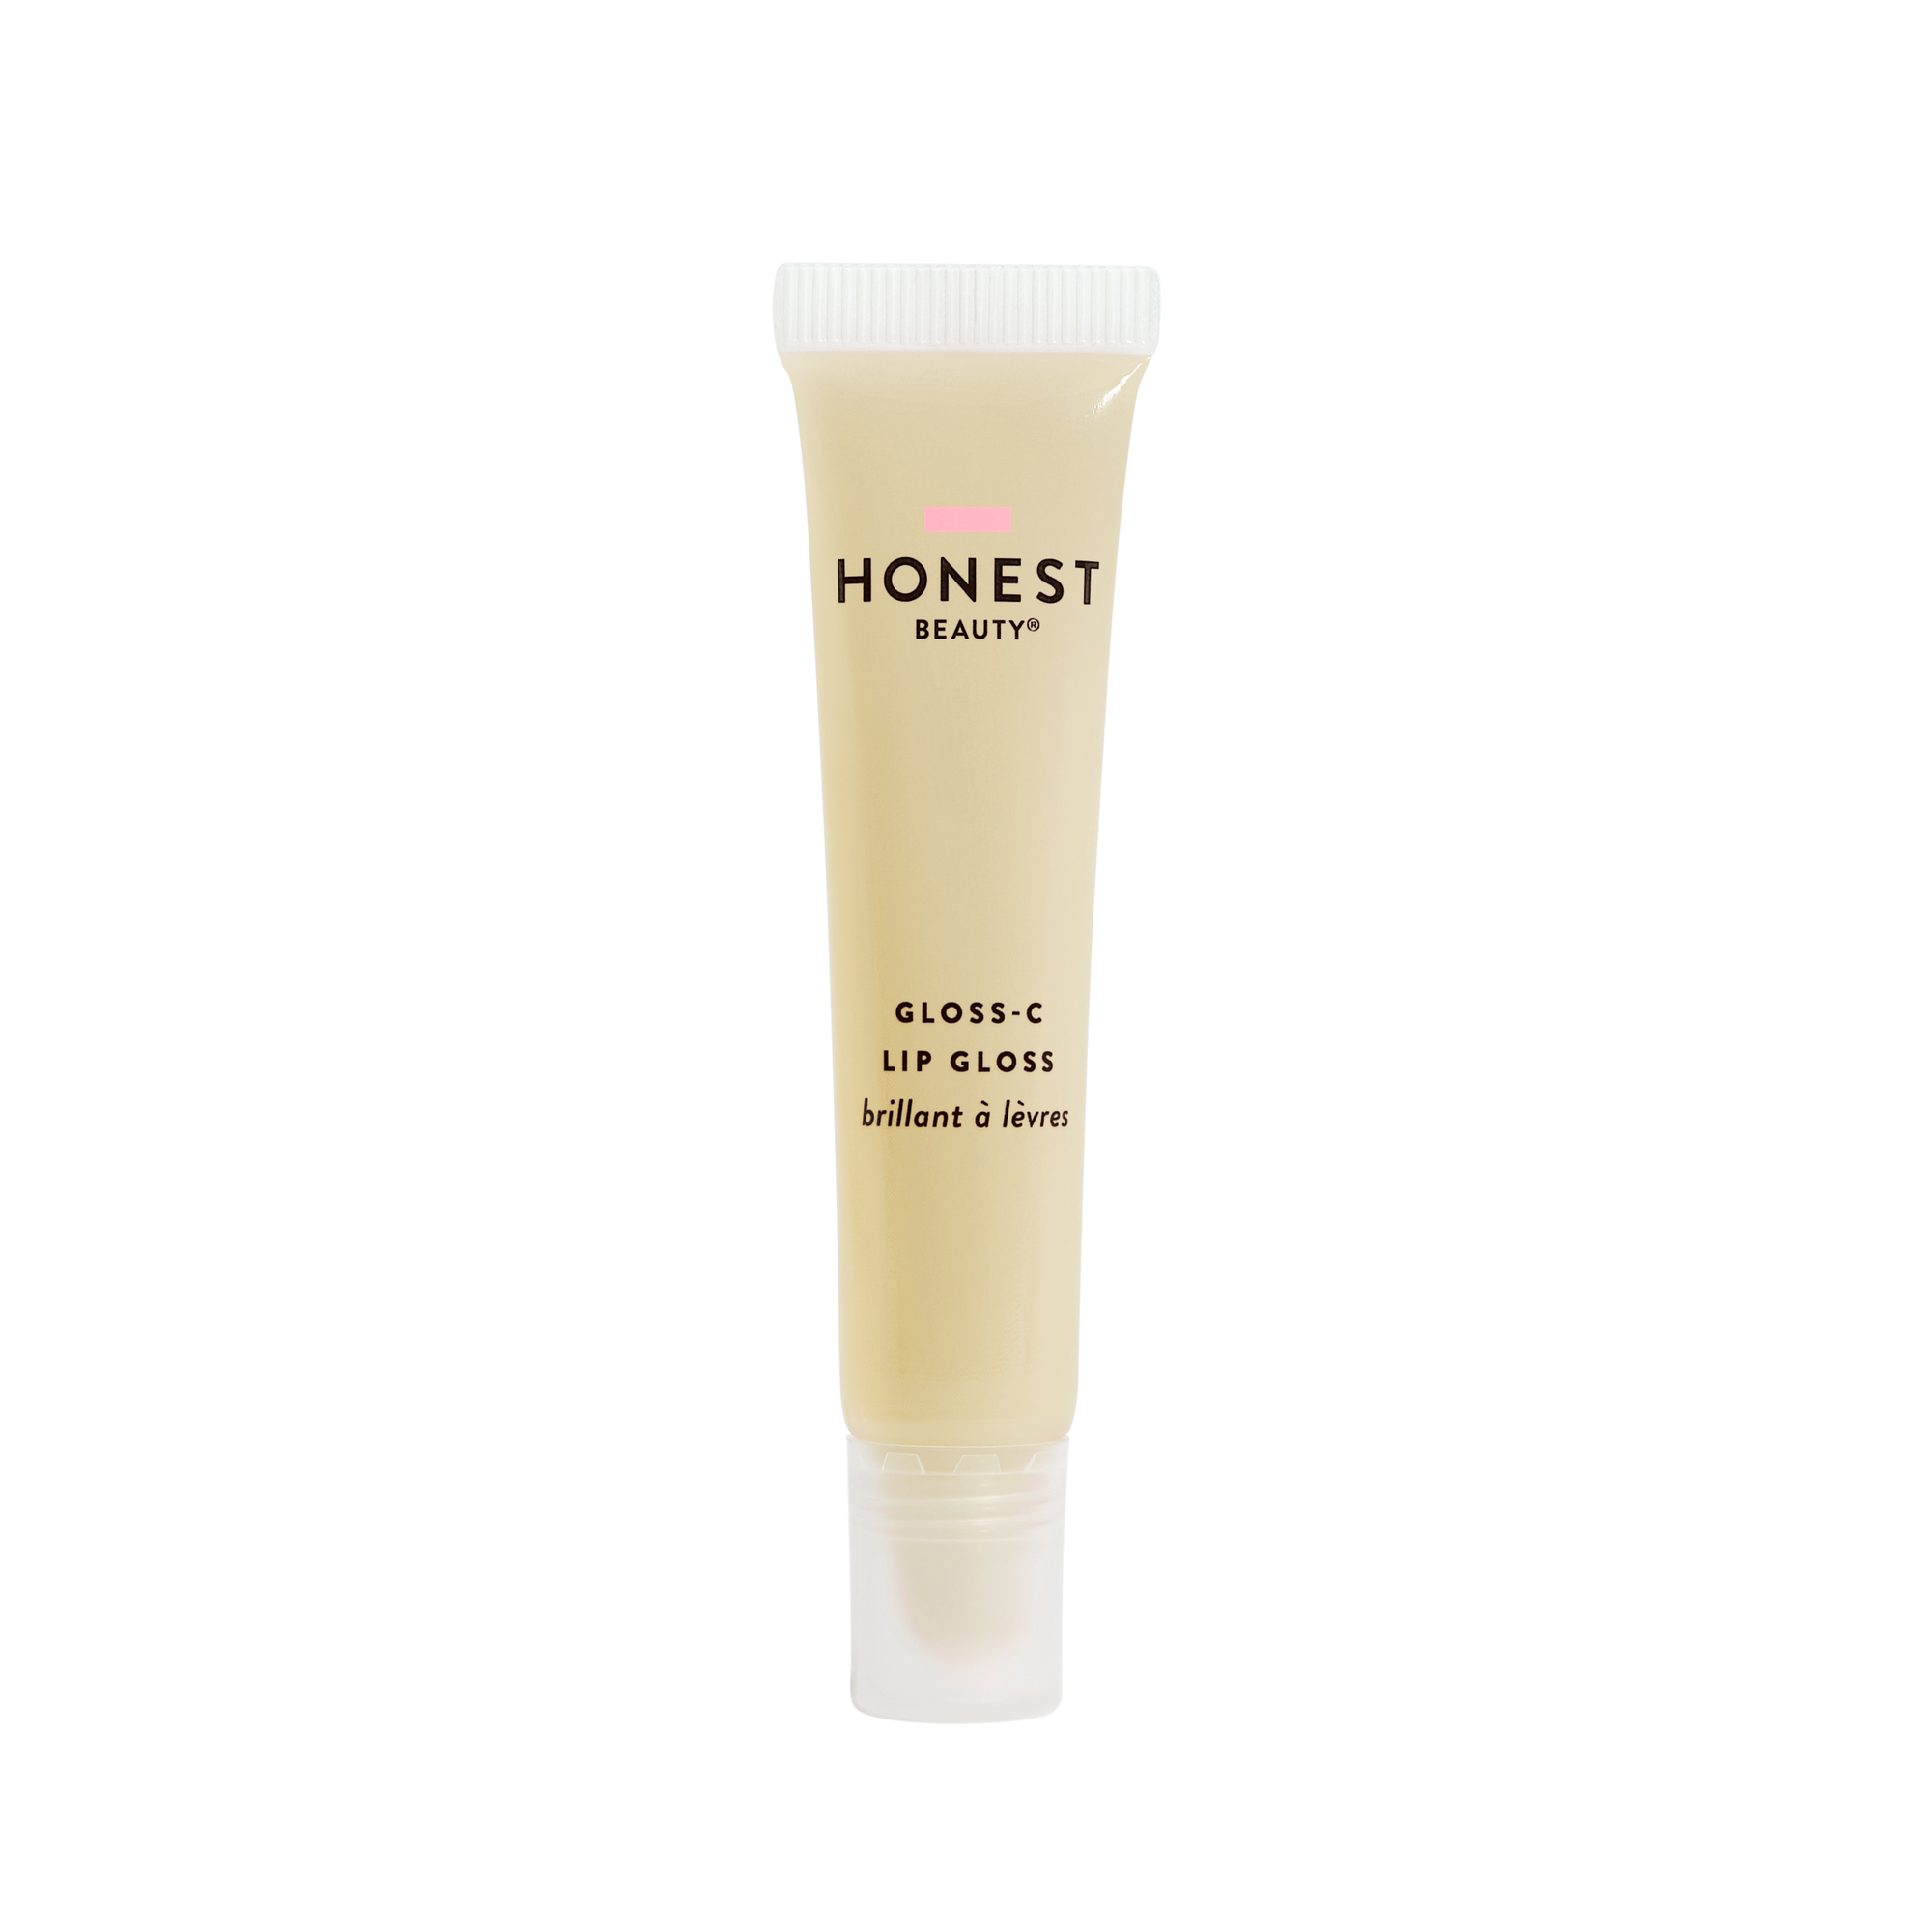 Honest Beauty Gloss-C Lip Gloss, Moonstone Vitamin & Supplement